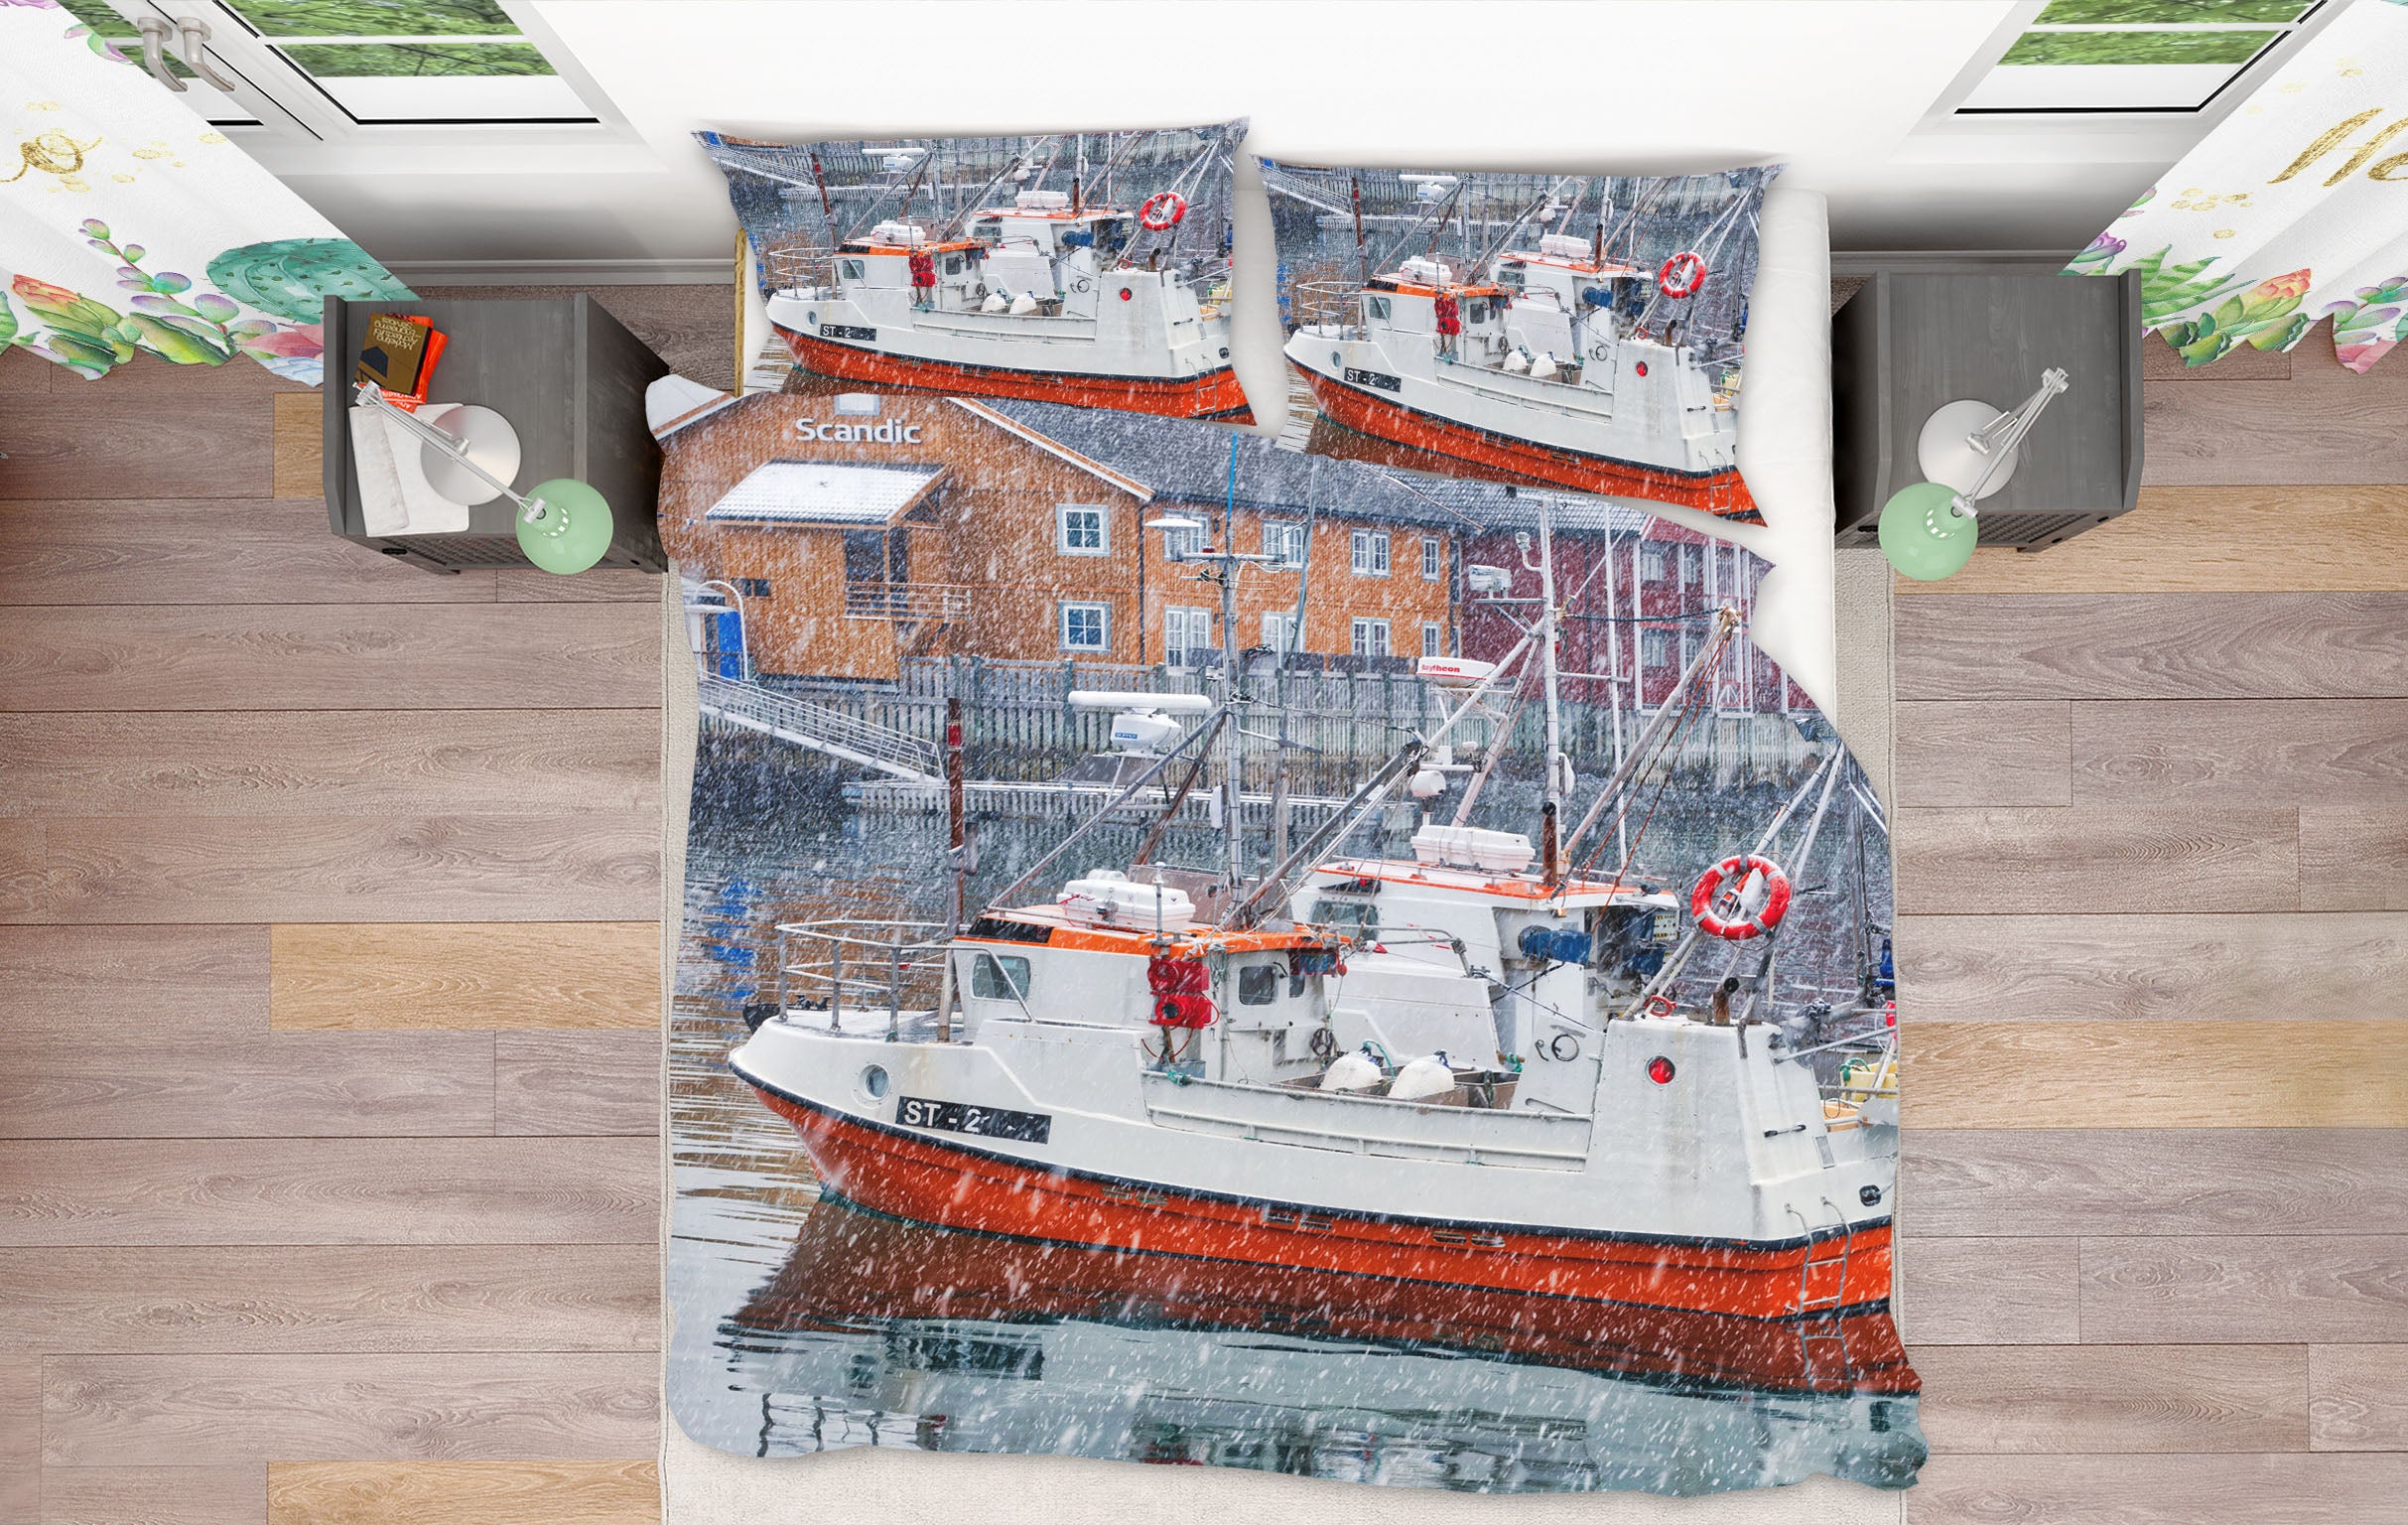 3D Arctic Seaport 005 Marco Carmassi Bedding Bed Pillowcases Quilt